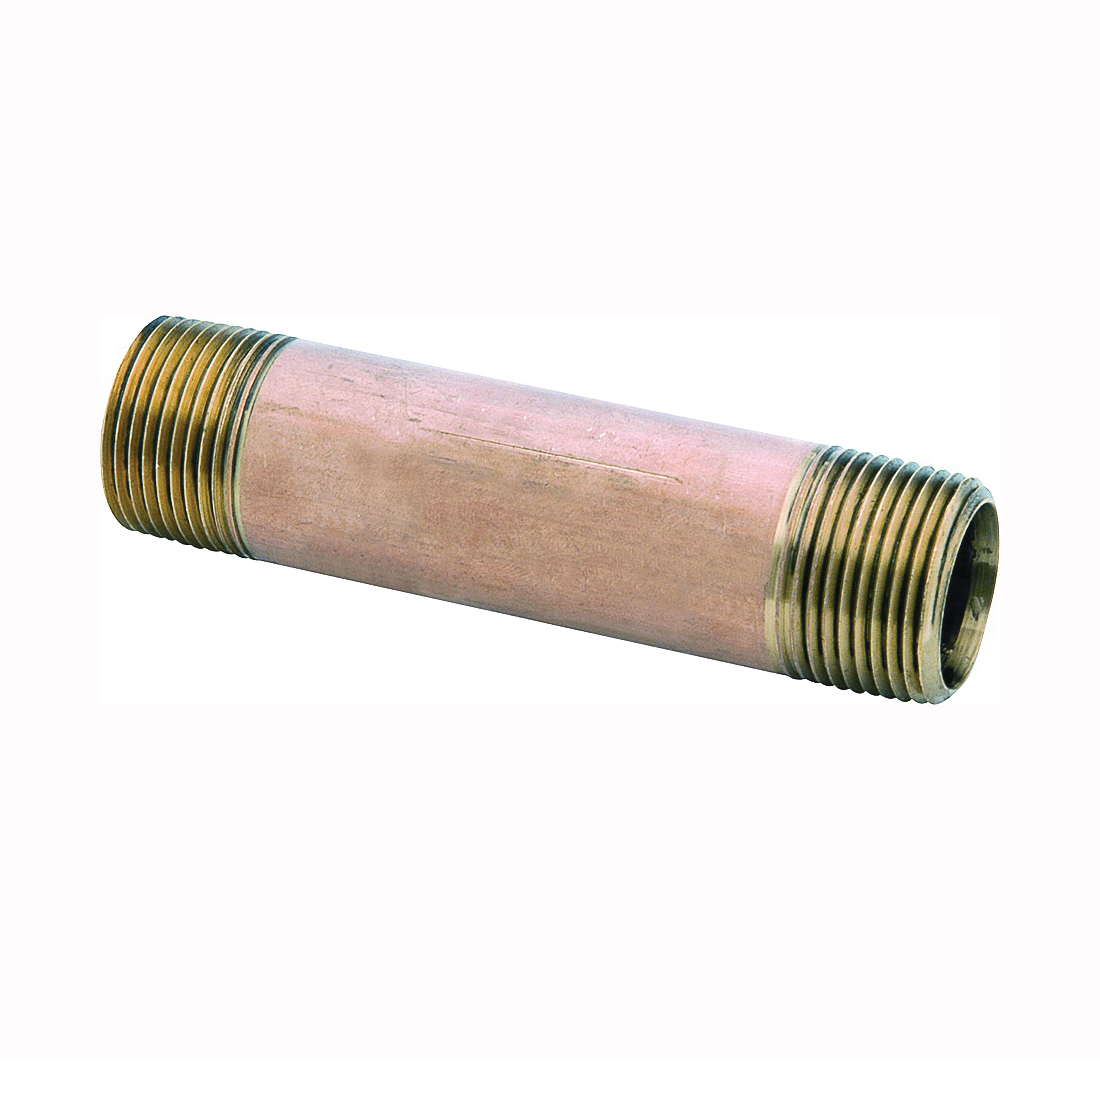 Anderson Metals 38300-1635 Pipe Nipple, 1 in, NPT, Brass, 630 psi Pressure, 3-1/2 in L - 1